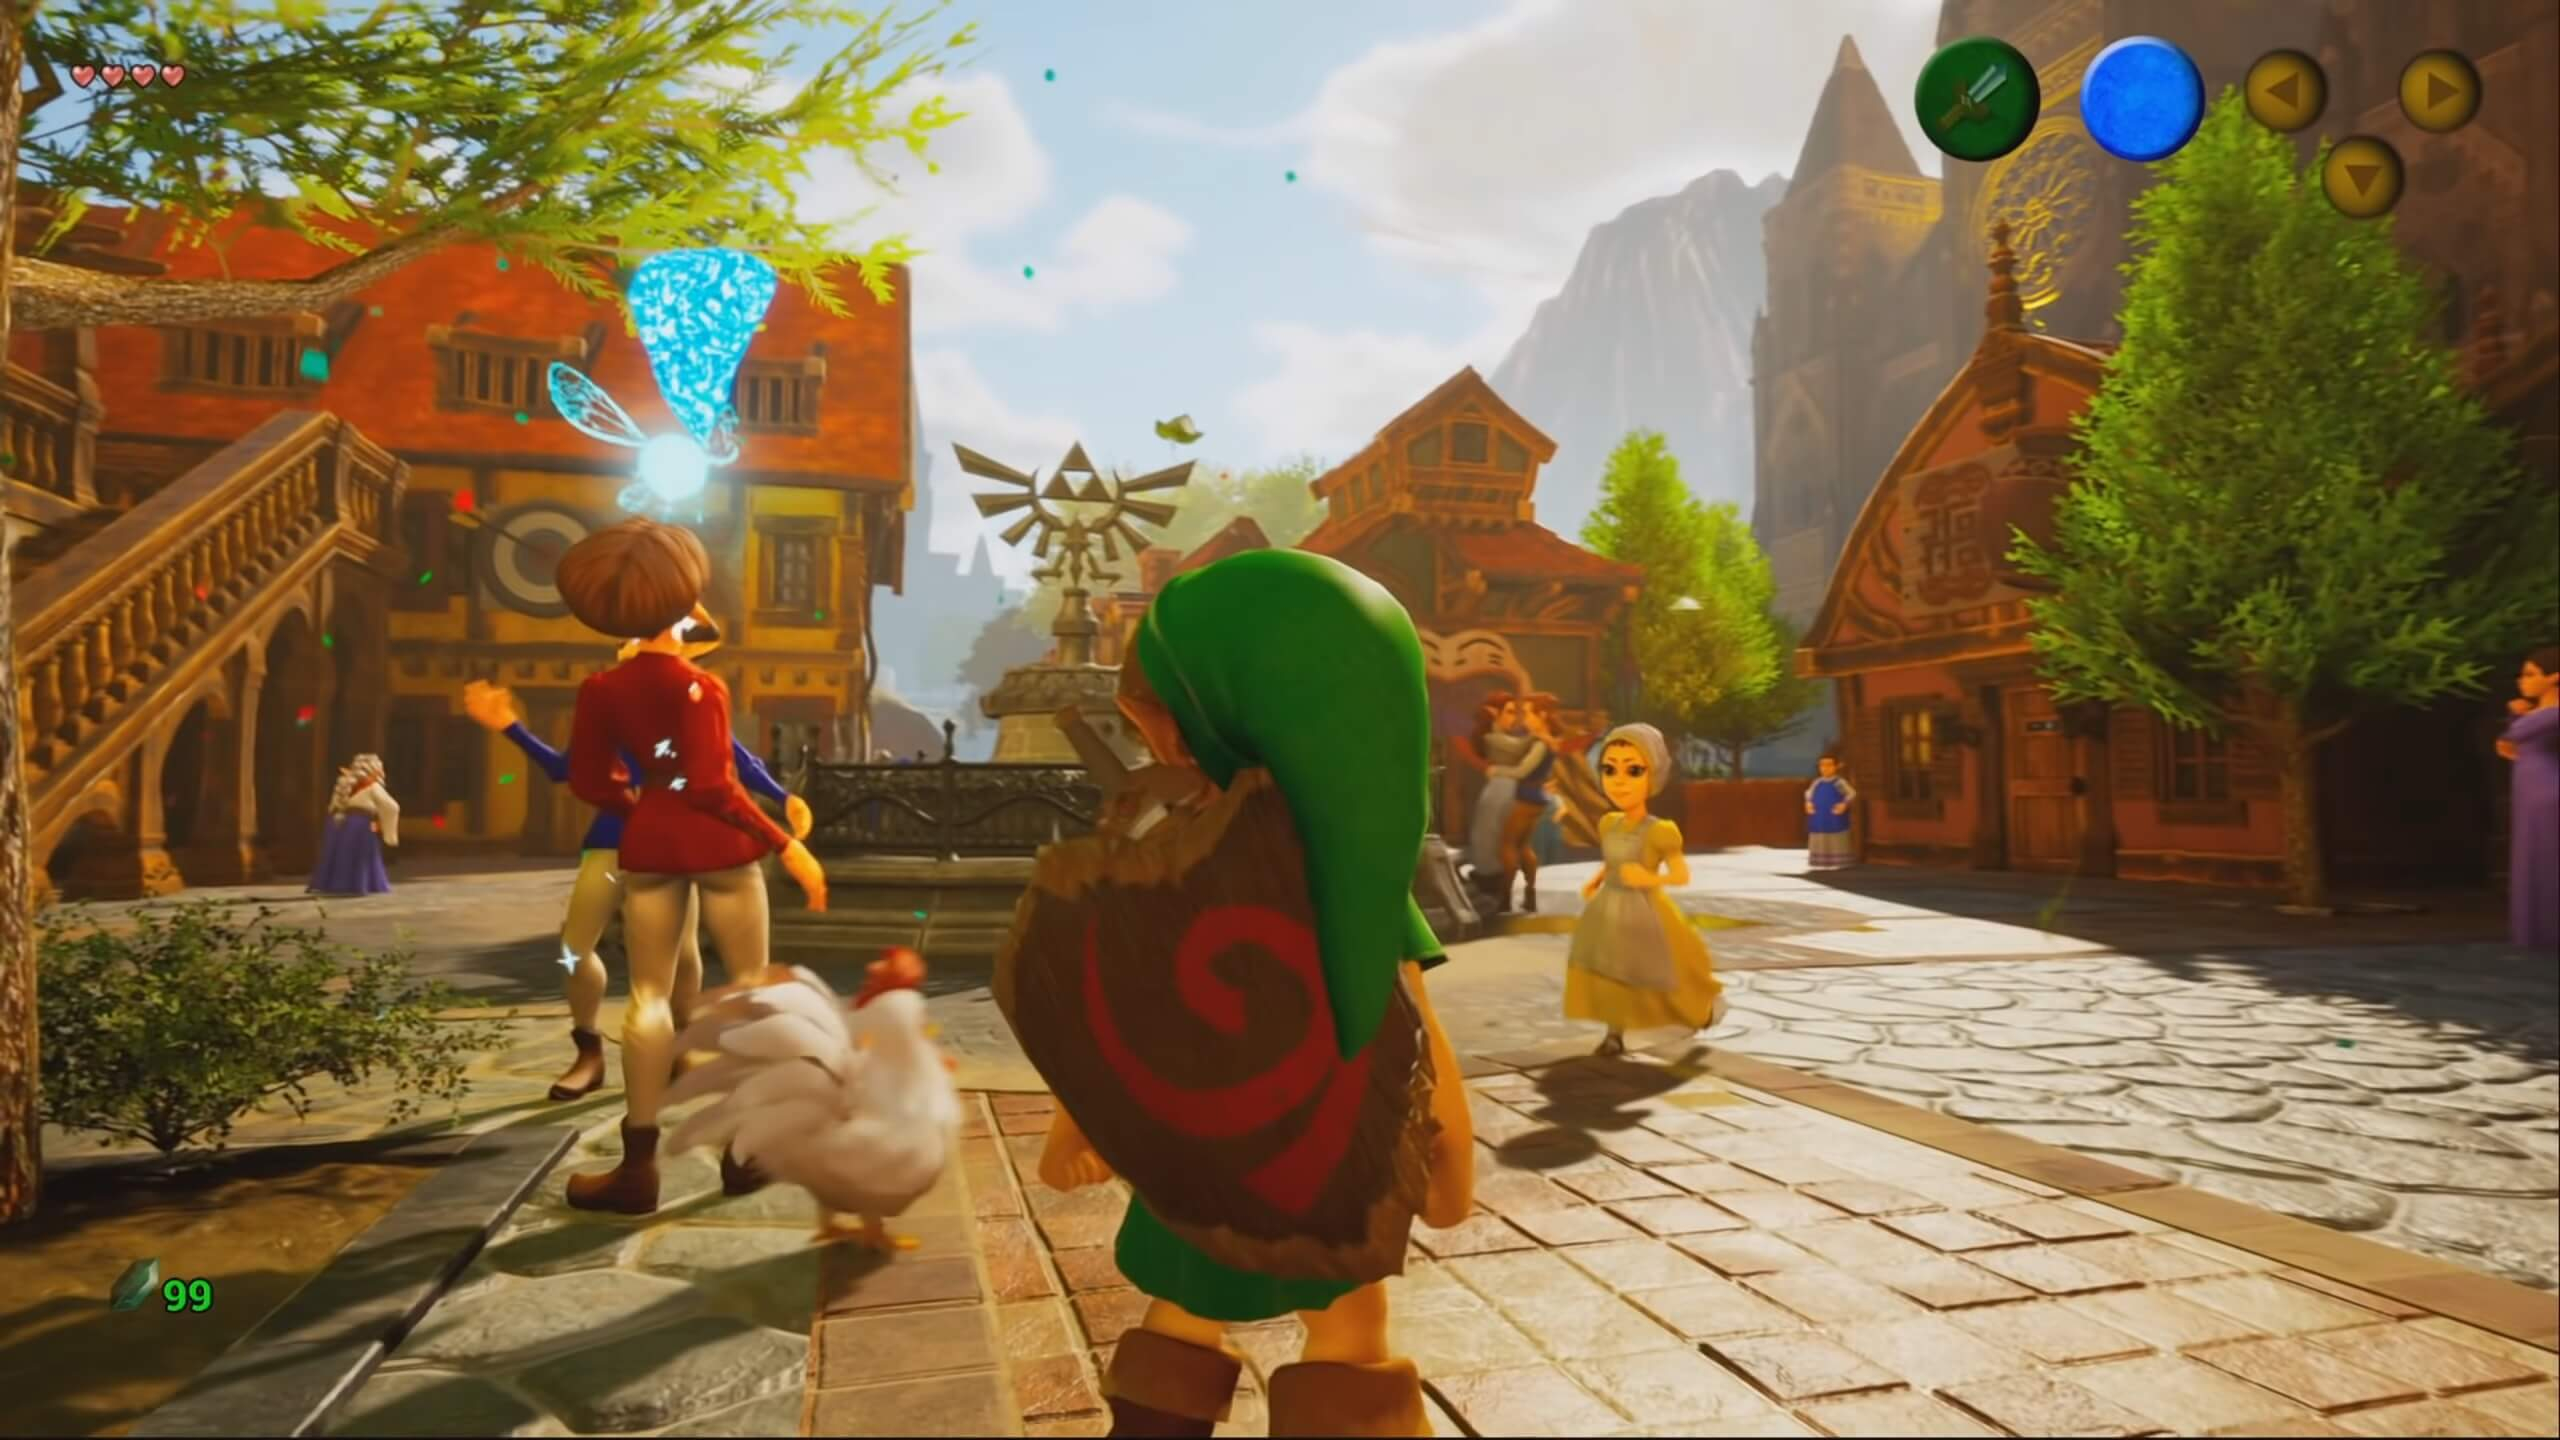 2560x1440 New Zelda Ocarina of Time Fan Remake in Unreal Engine 5 video shows off Lumen improvements